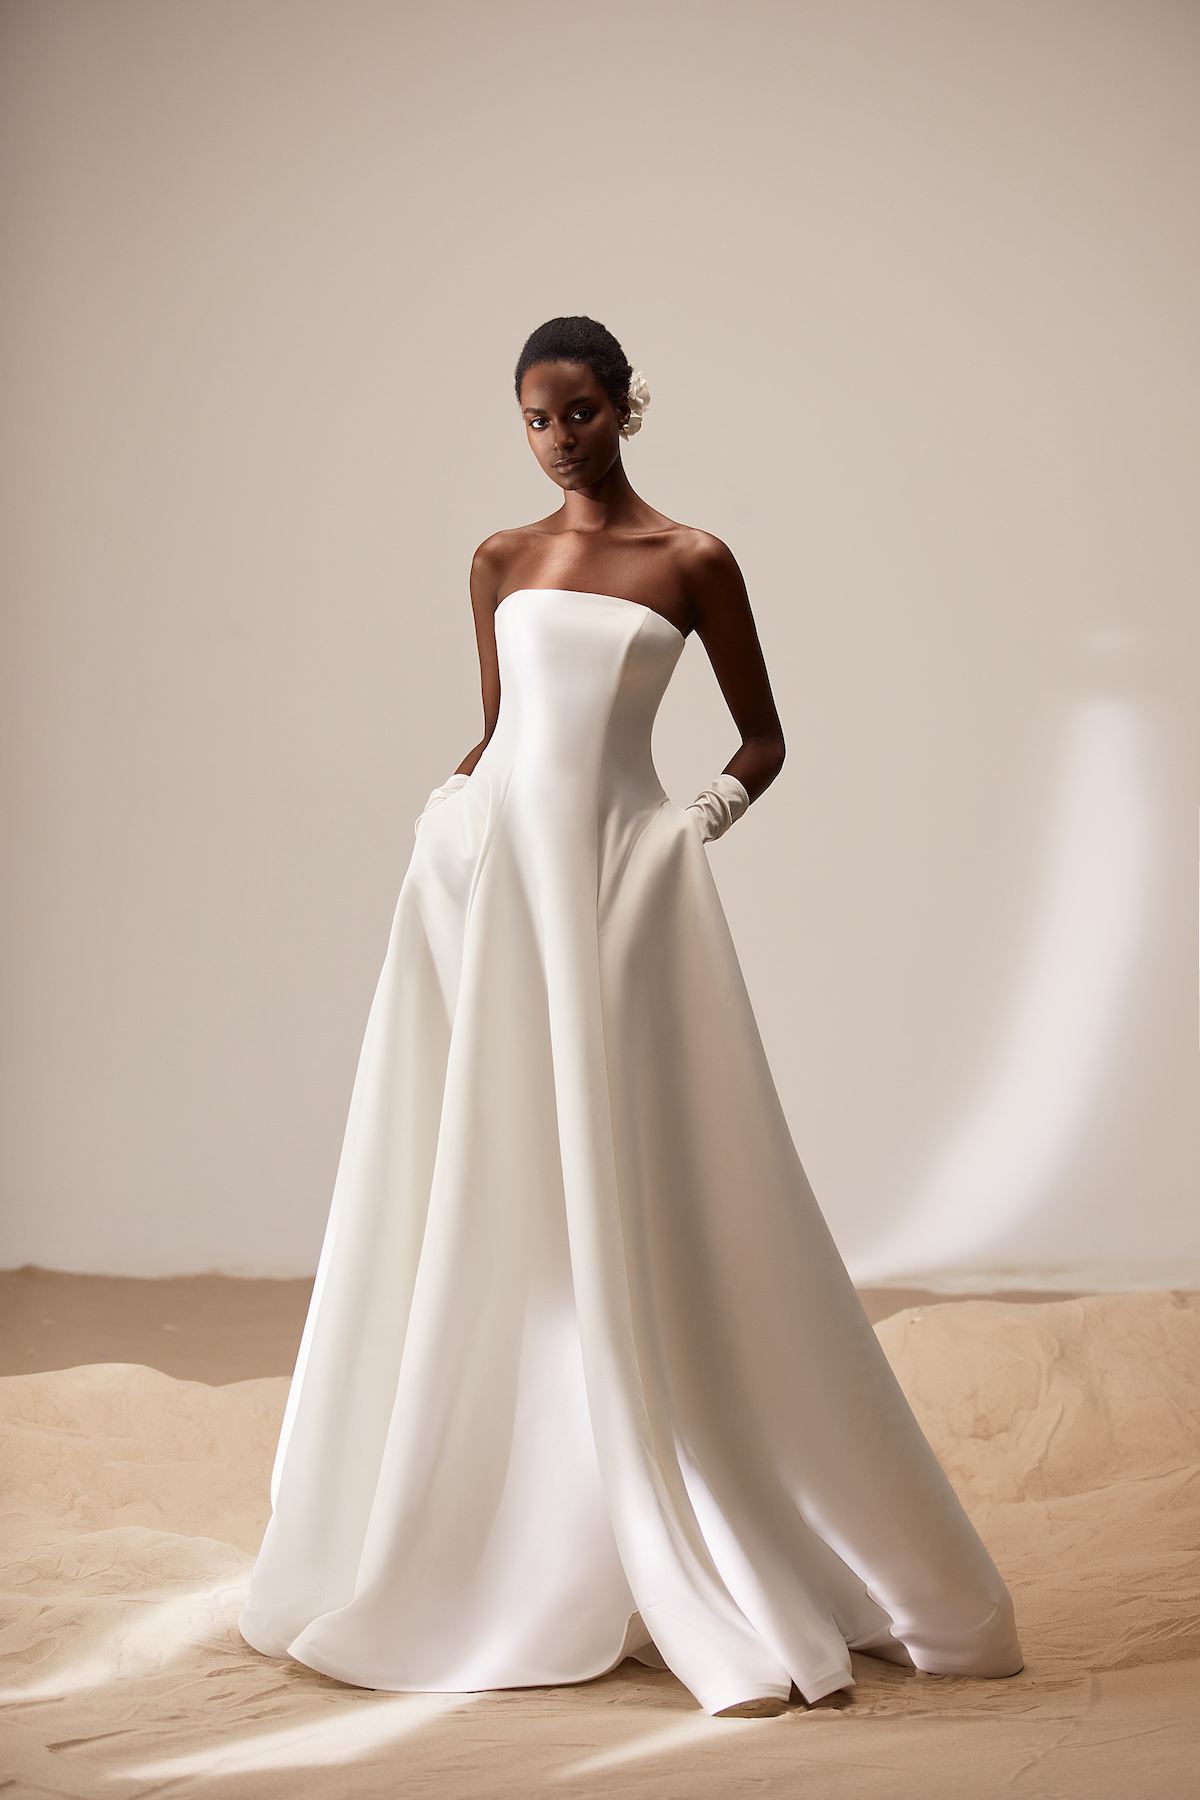 Simple Elegant Wedding Dress by Milla Nova - Simonelle white lace